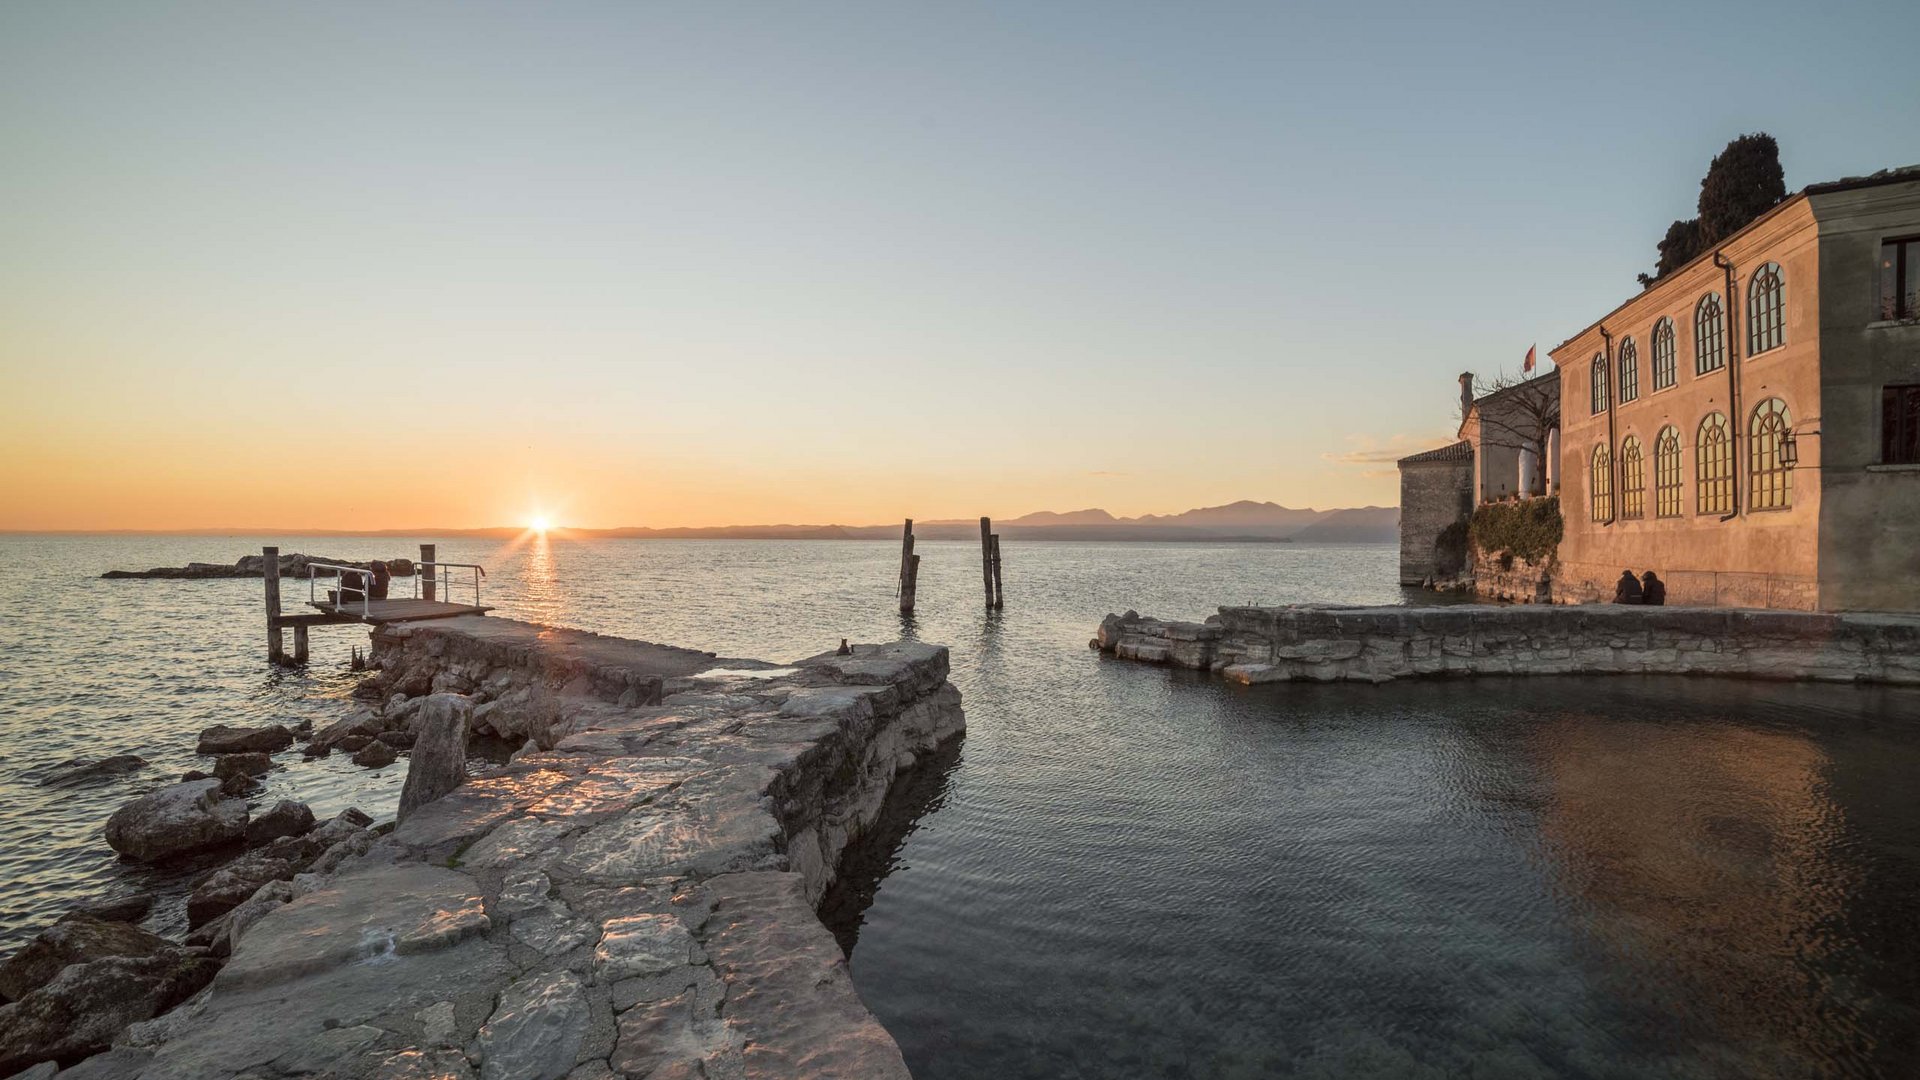 Our 4-star hotel on Lake Garda